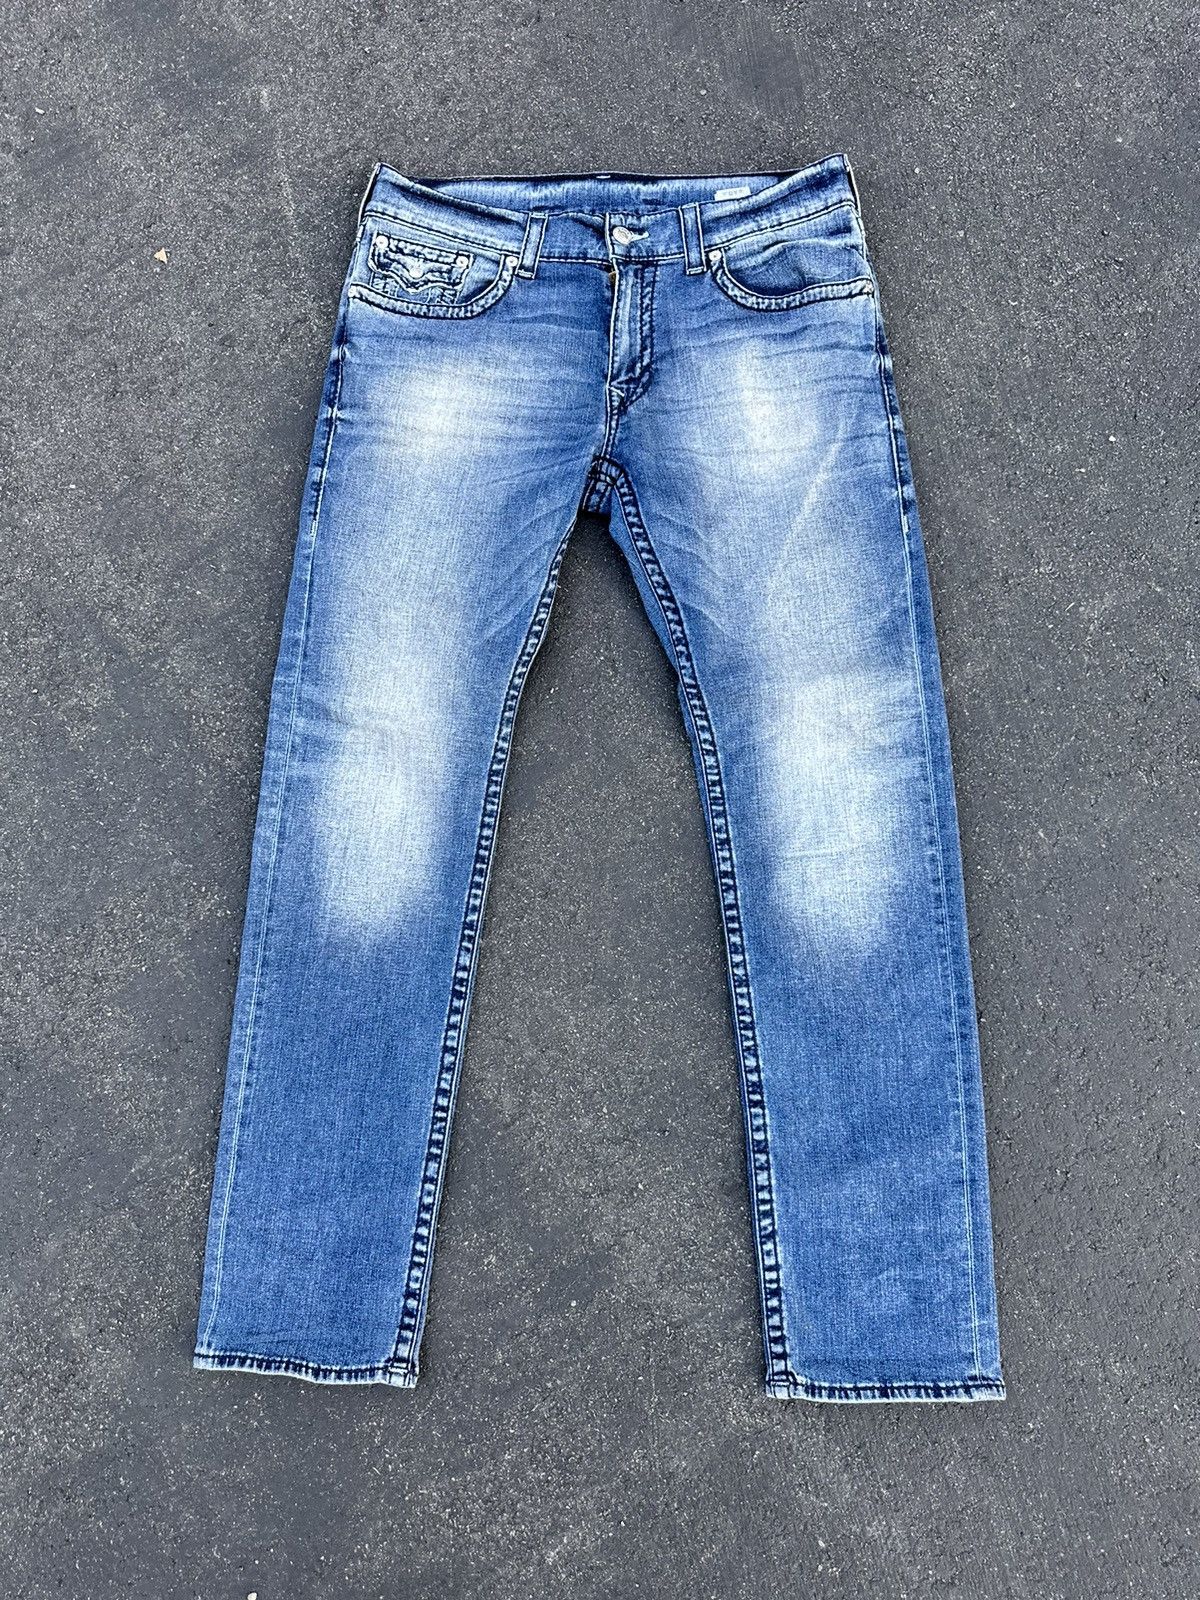 True Religion Vintage True Religion Y2K Streetwear Jeans | Grailed